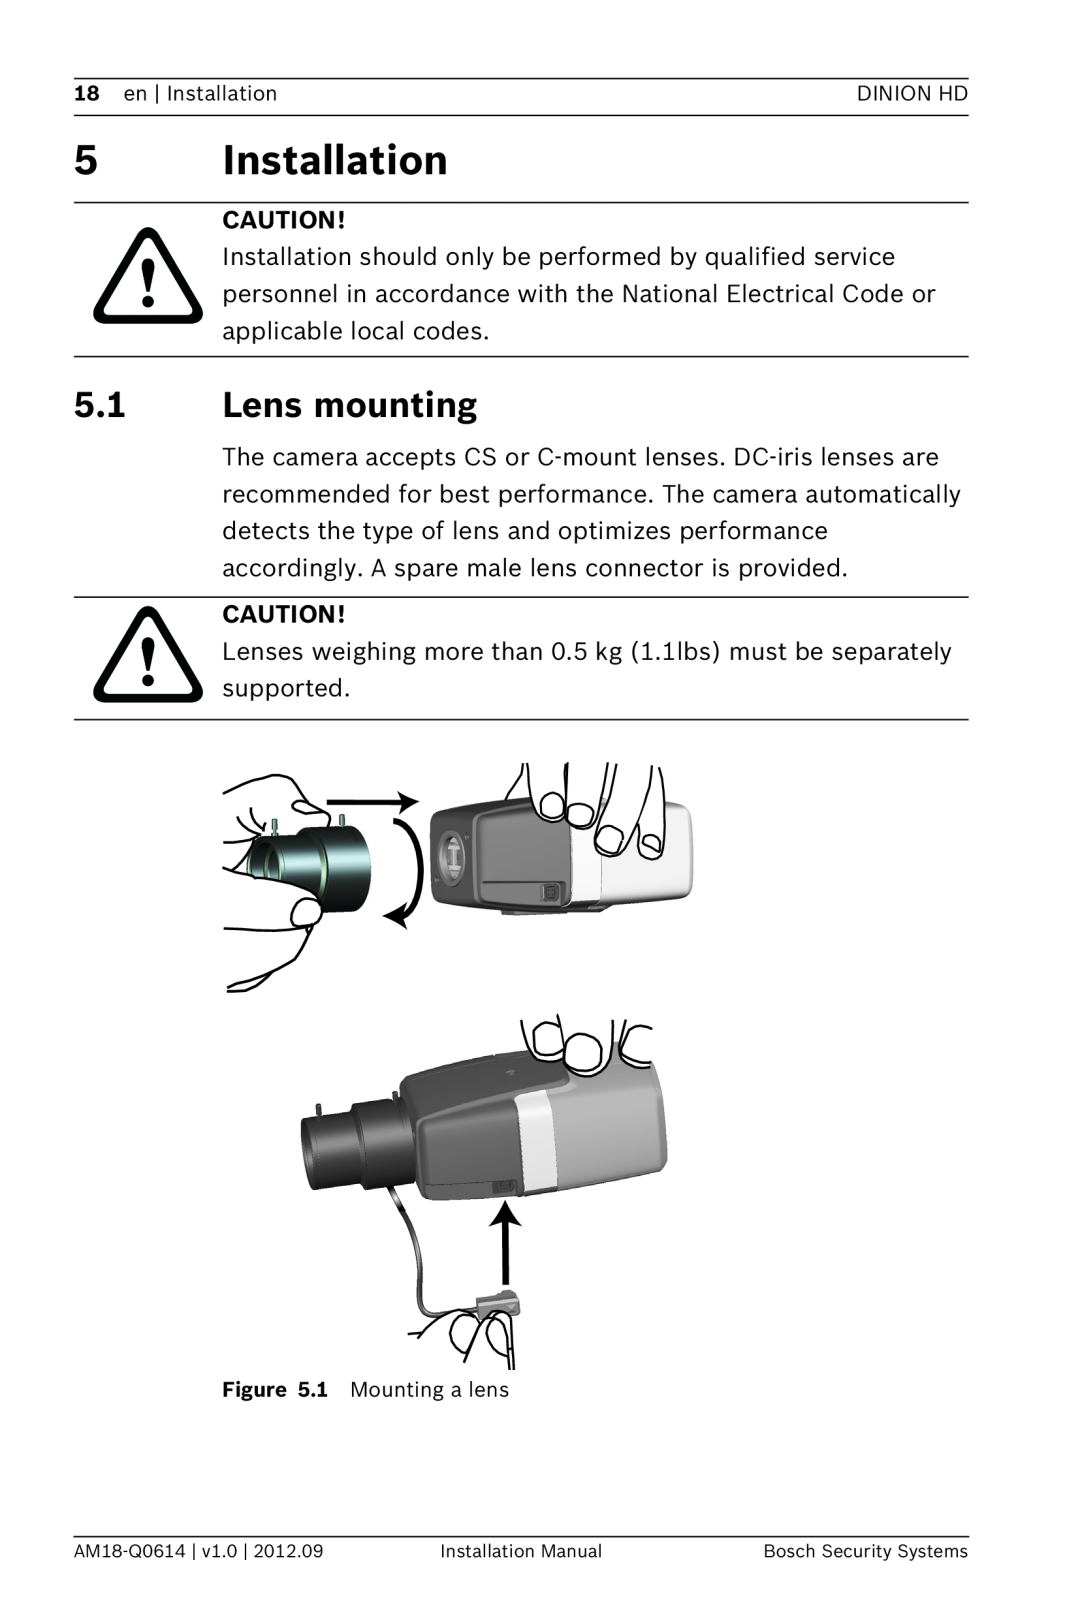 Bosch Appliances NBN-733 installation manual 5Installation, 5.1Lens mounting 